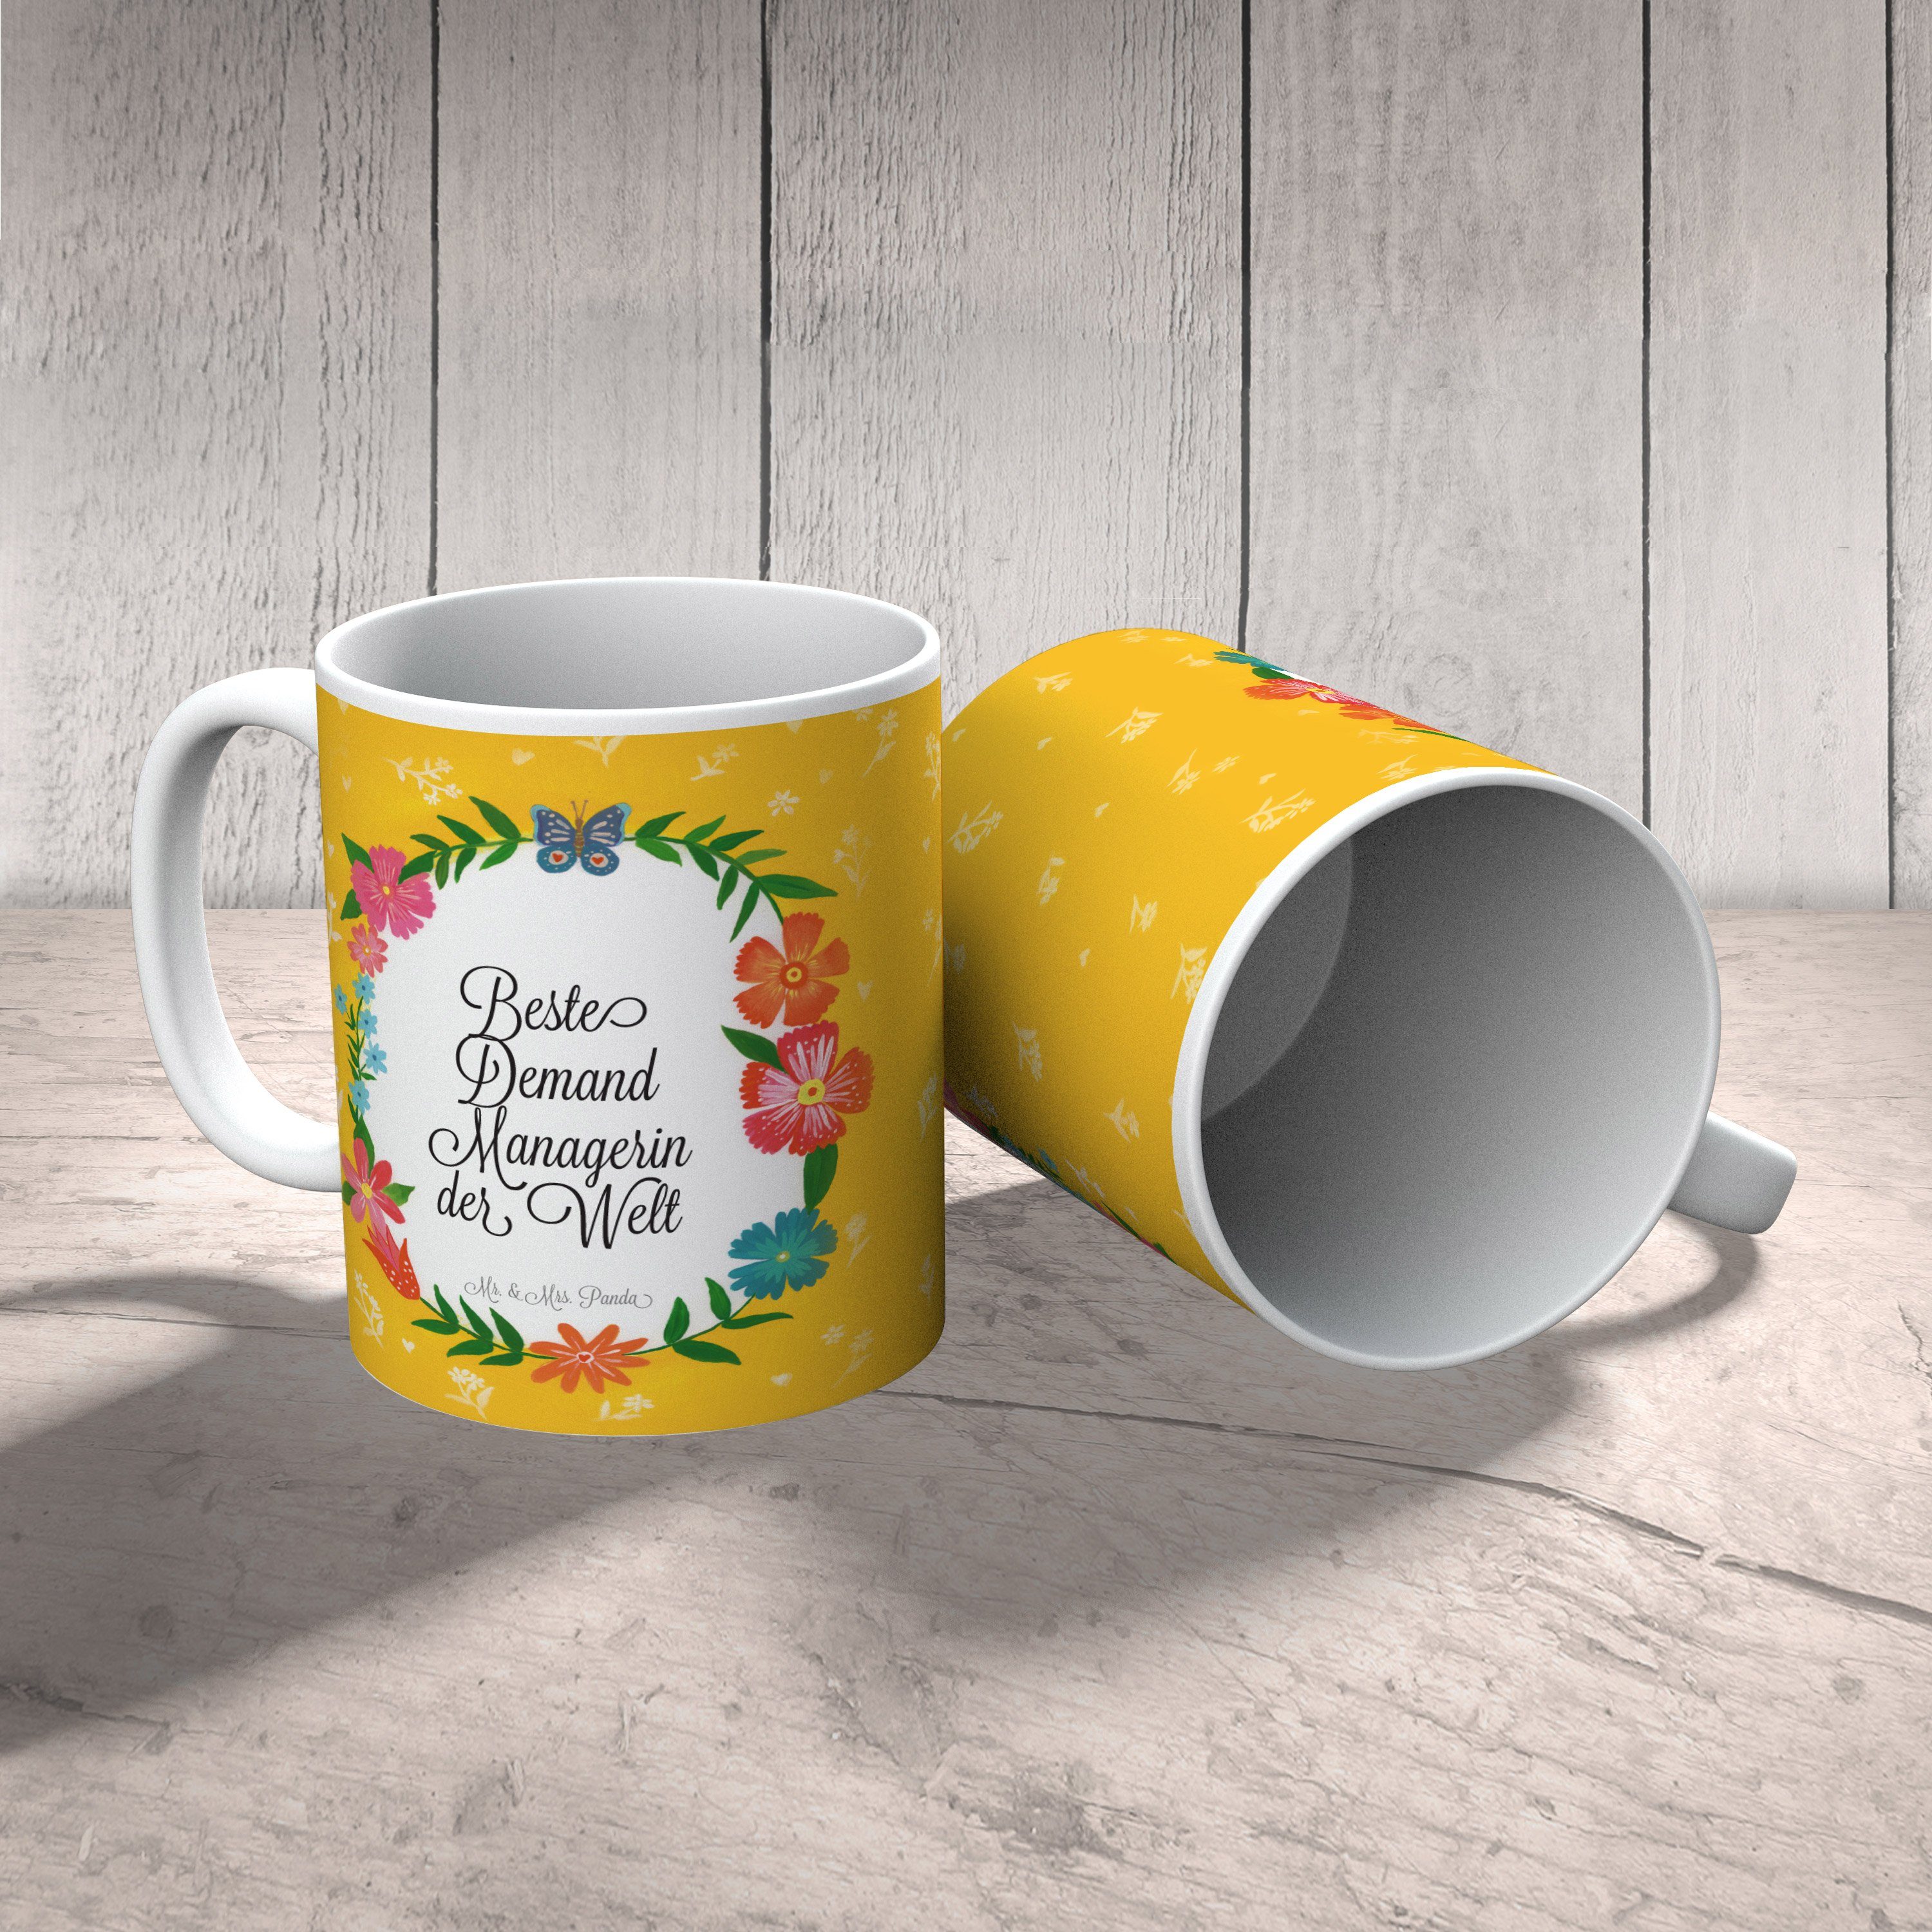 Mr. & Mrs. Panda Tasse Keramiktasse, Demand Geschenk, Managerin Tasse Kaffeetasse, Motive, - Keramik